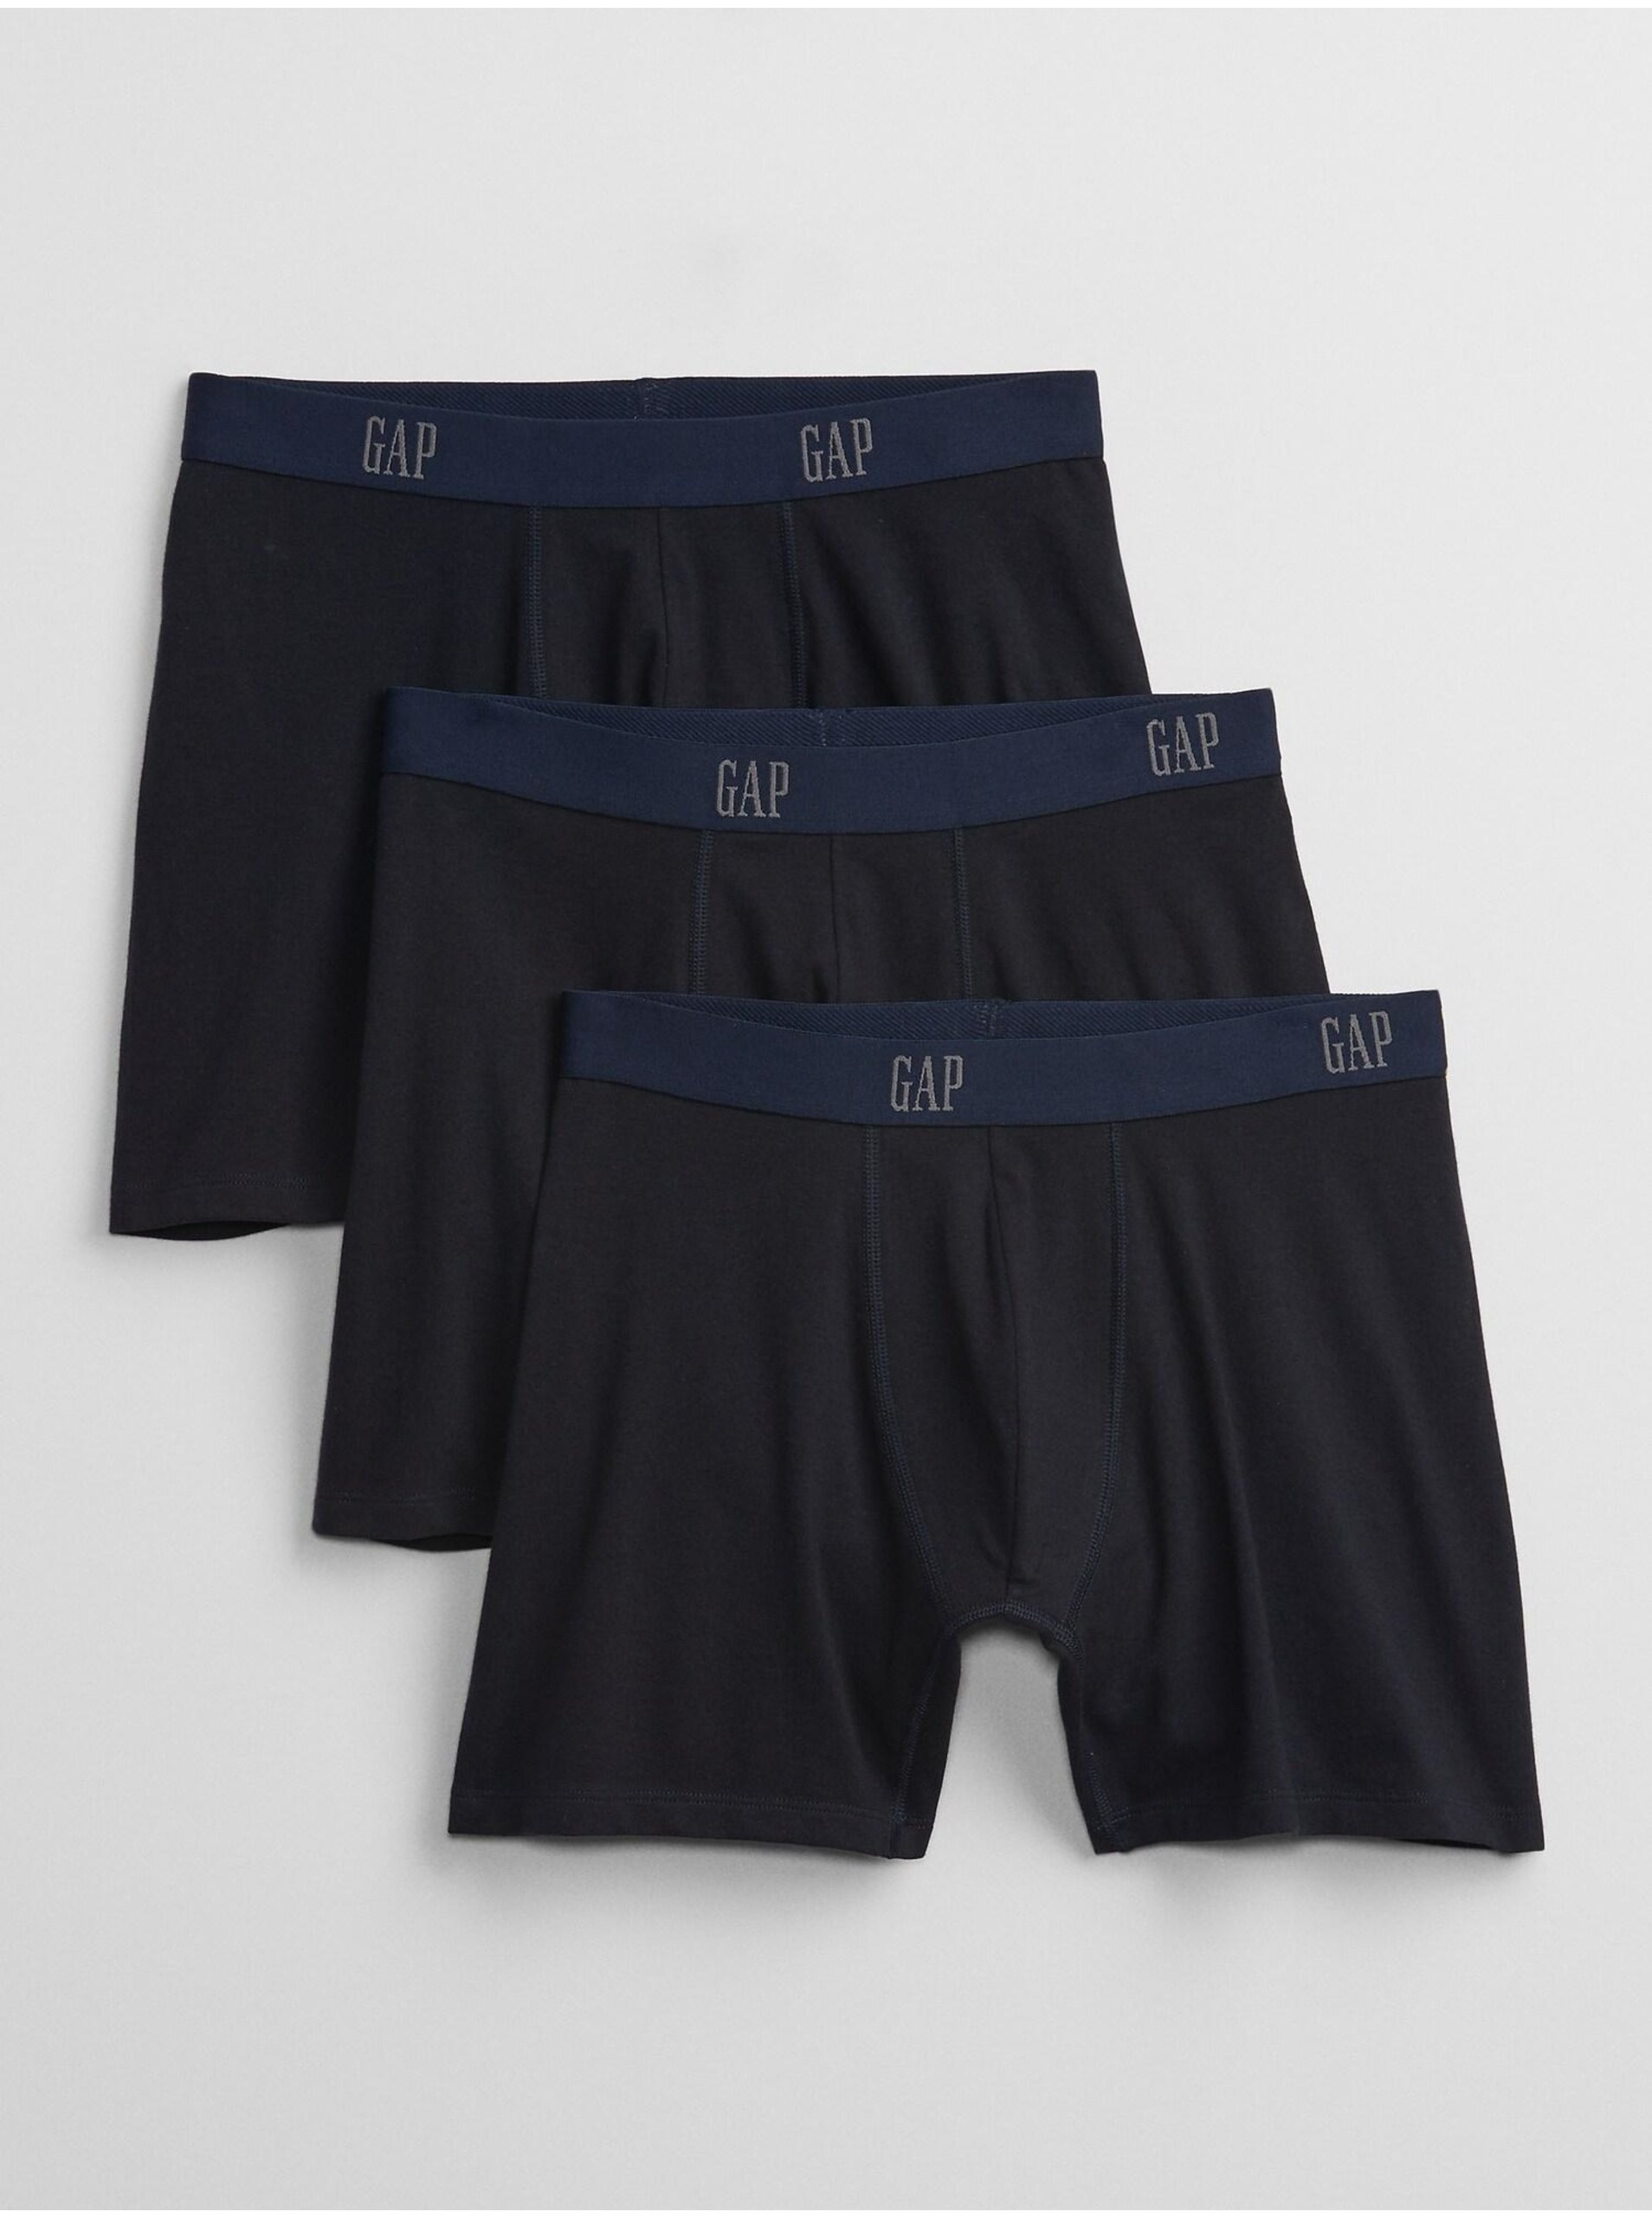 E-shop Modré pánské boxerky GAP Logo boxer briefs, 3ks